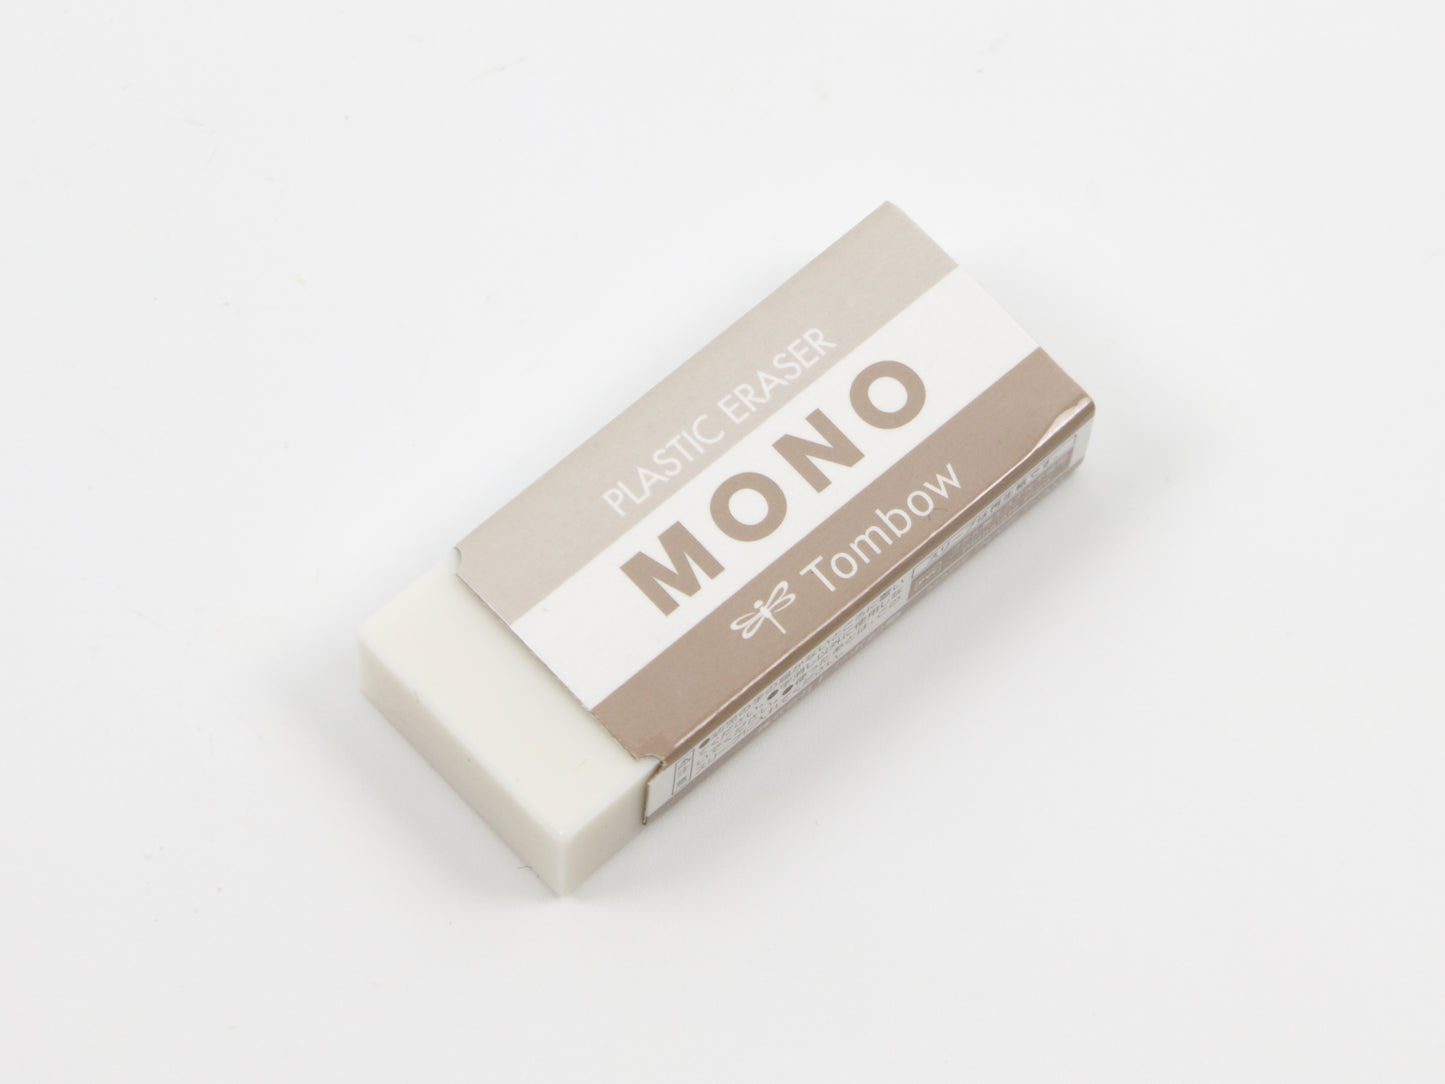 Tombow Mono Plastic Eraser Dusty